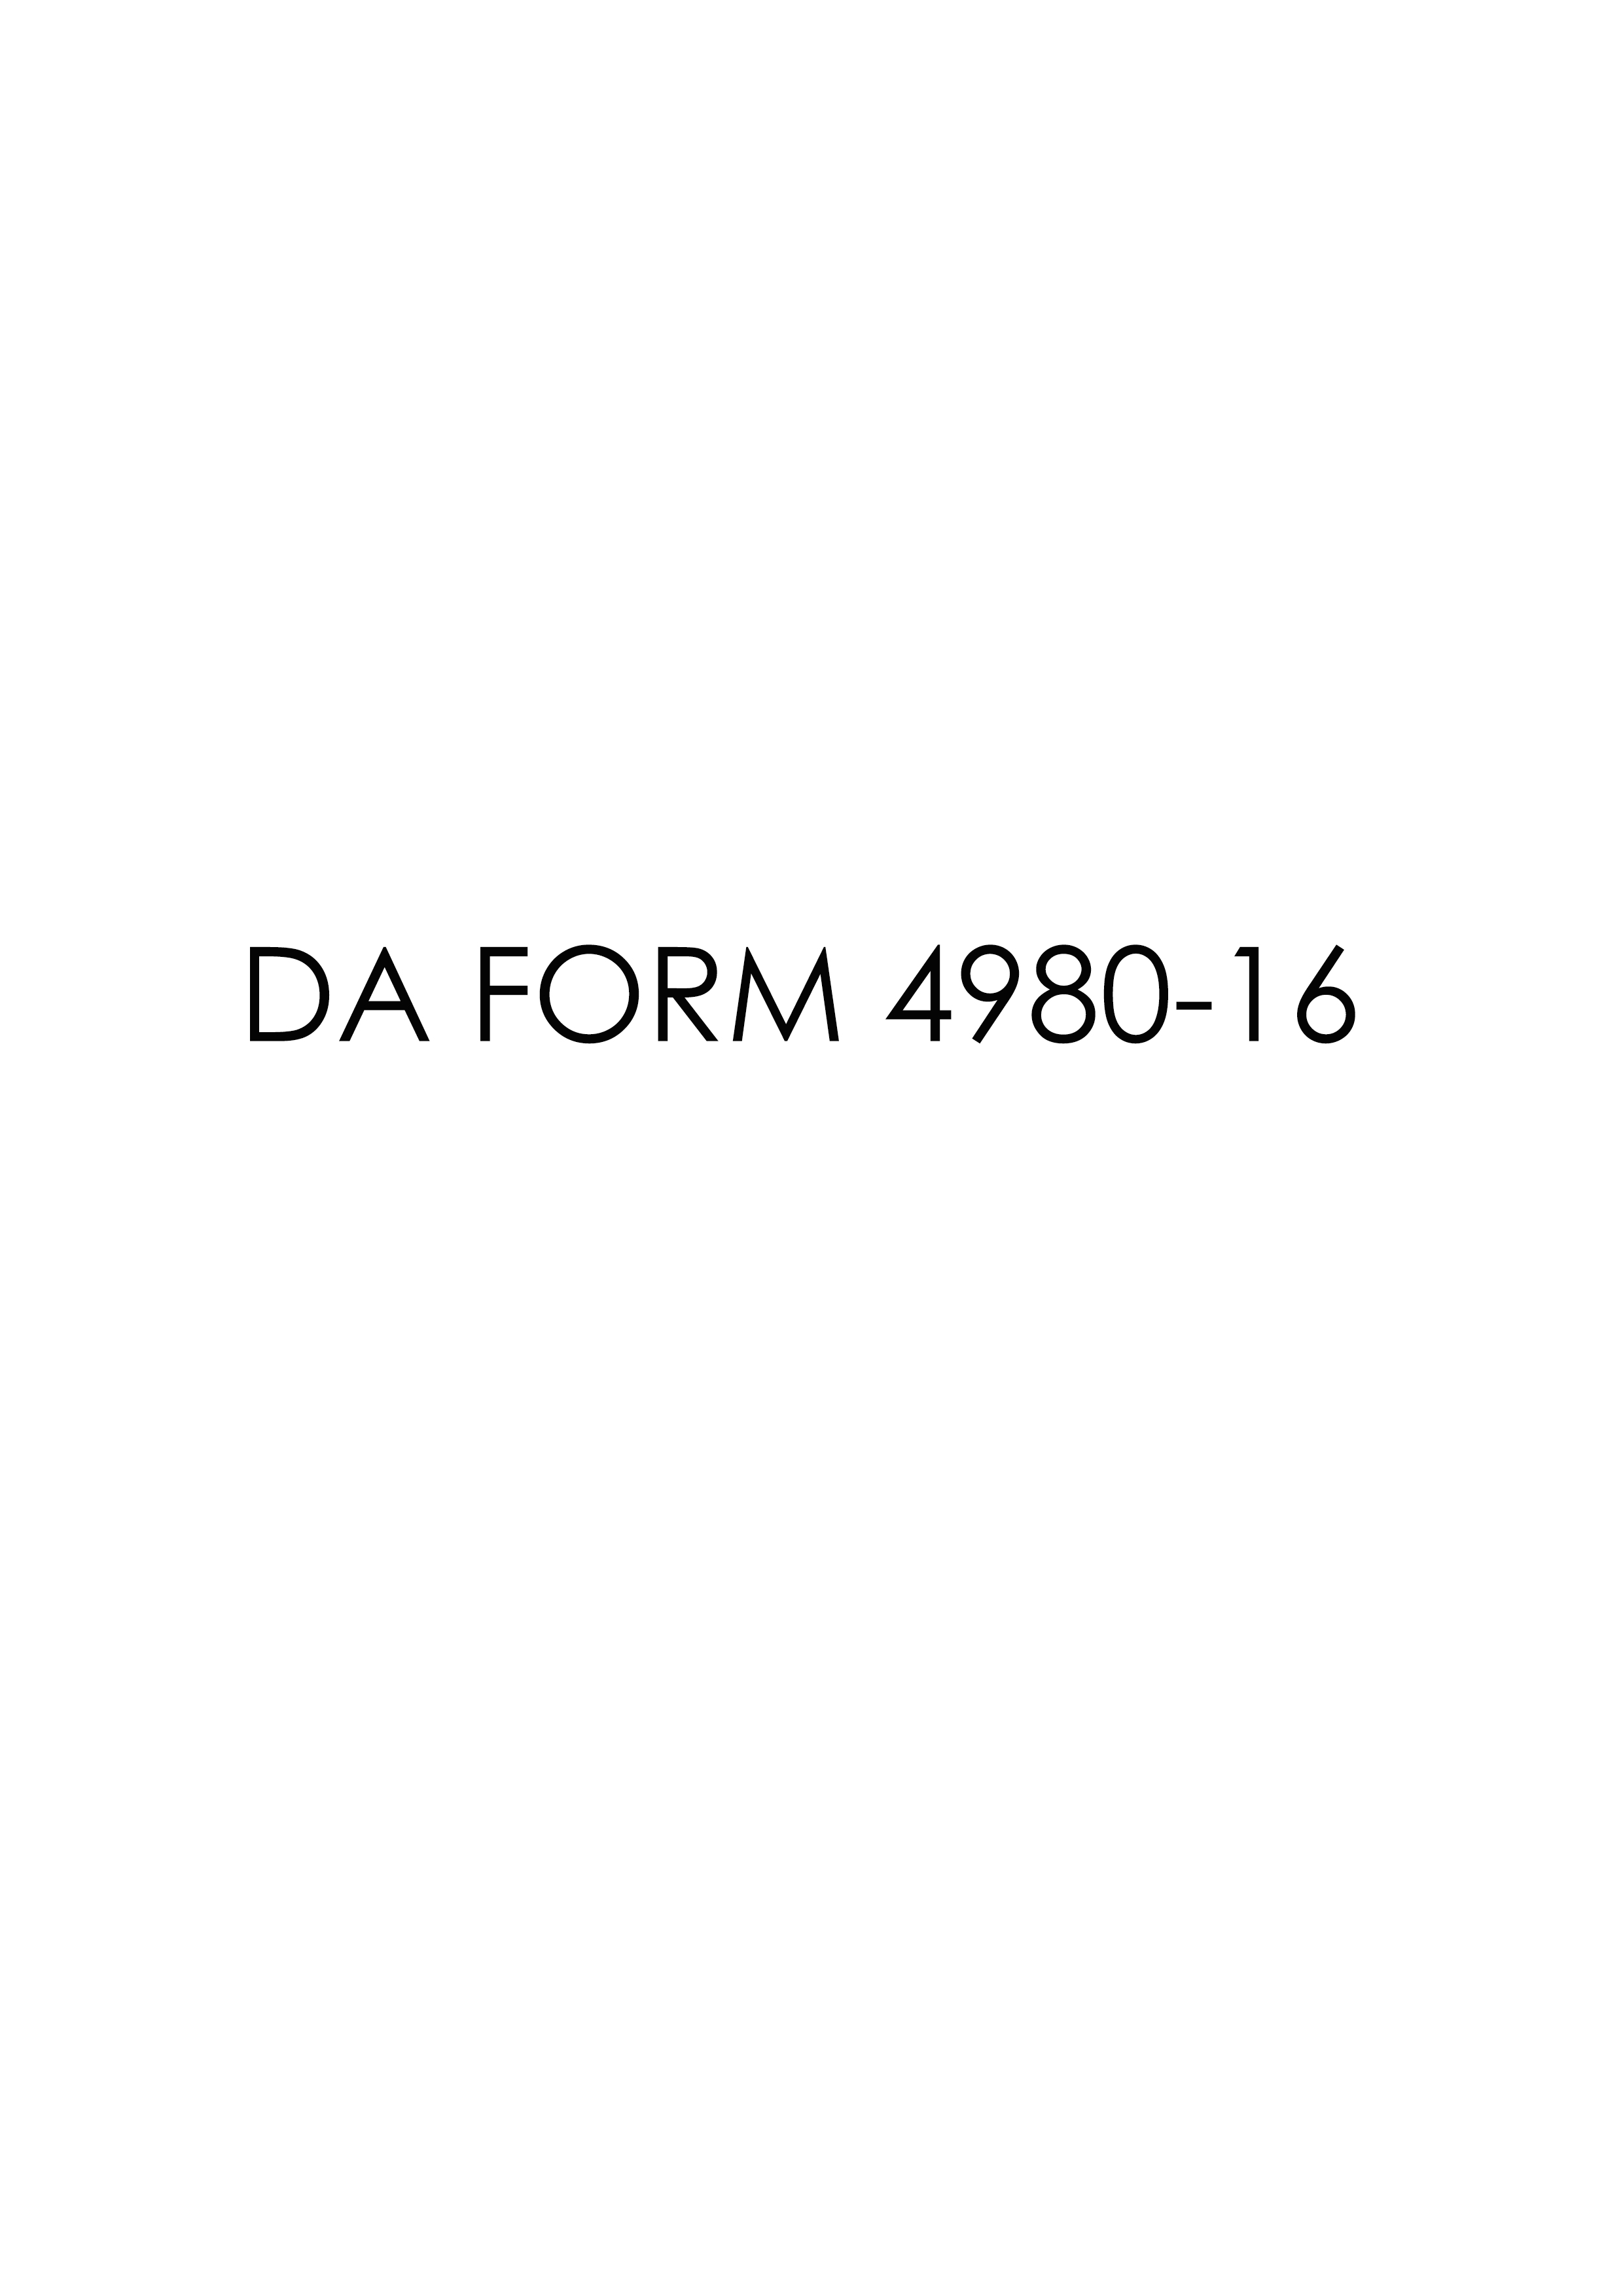 da Form 4980-16 fillable